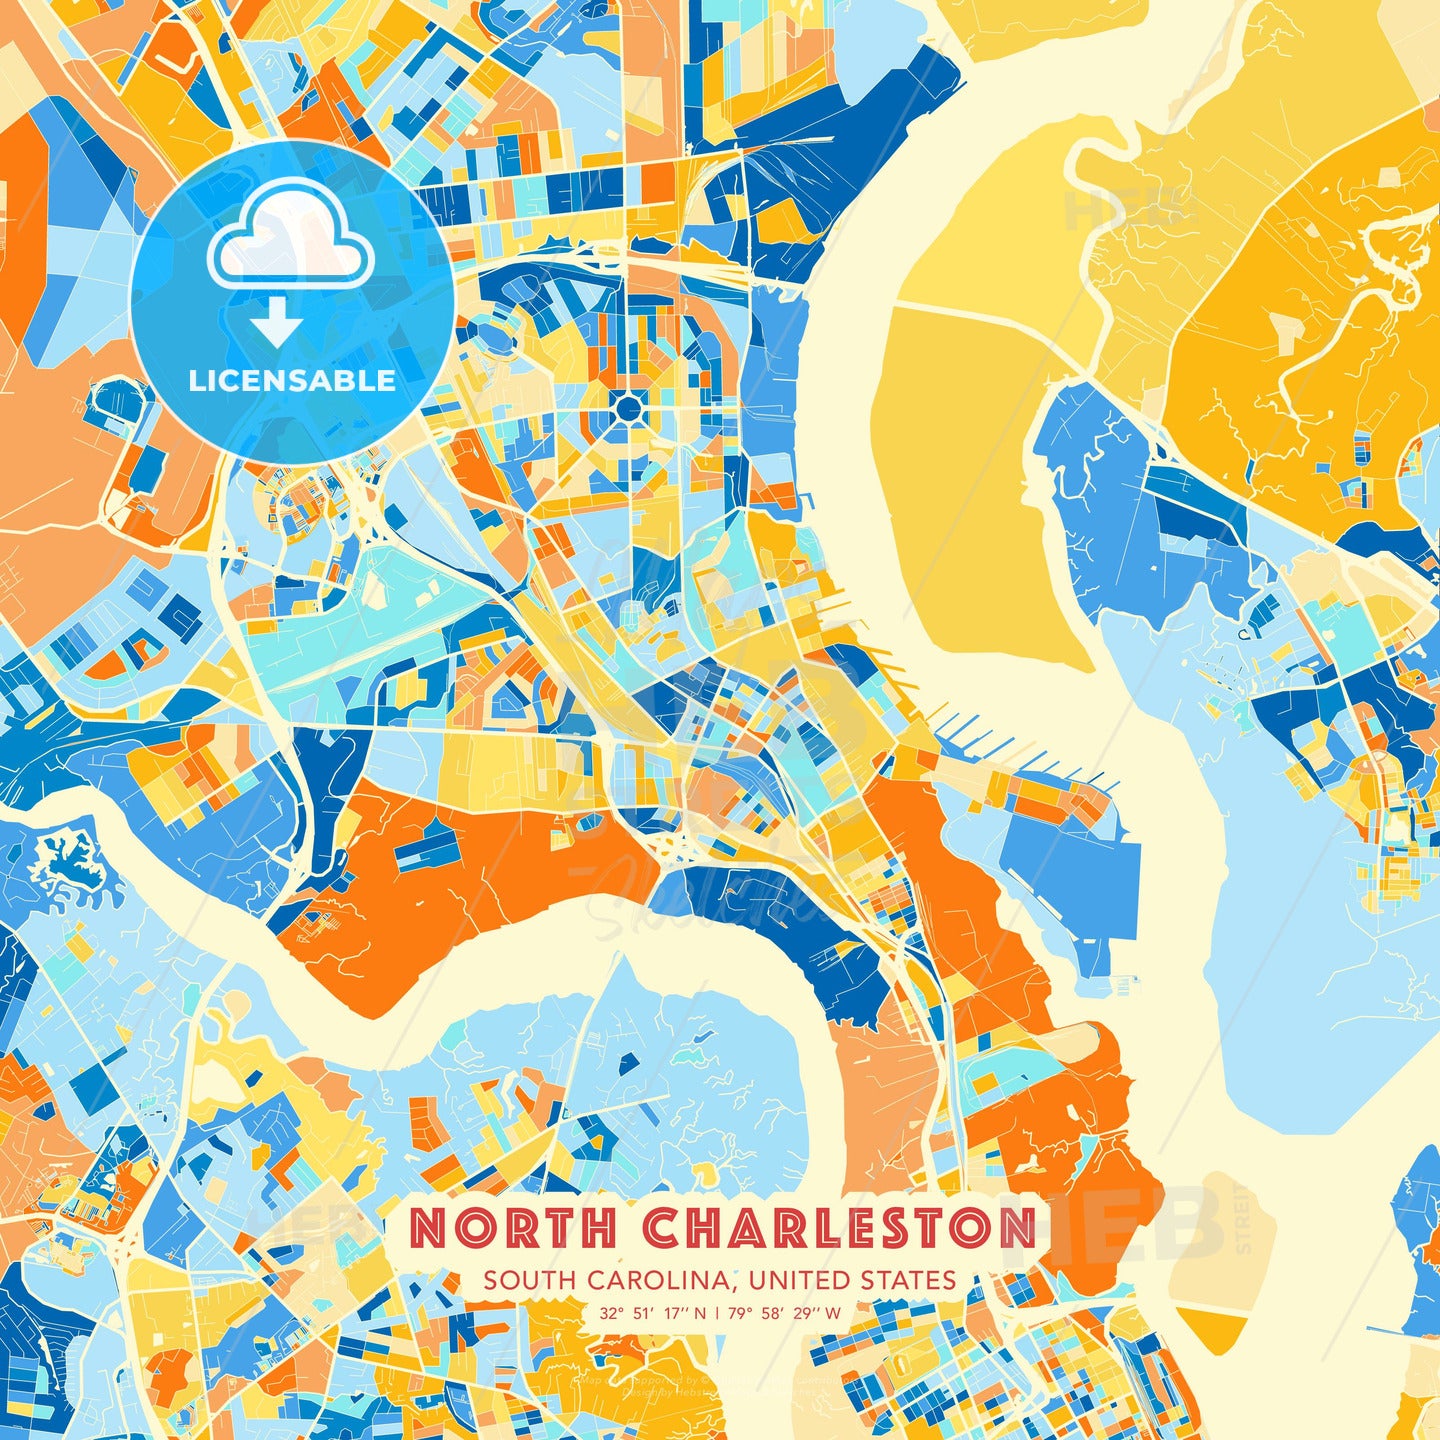 North Charleston, South Carolina, United States, map - HEBSTREITS Sketches